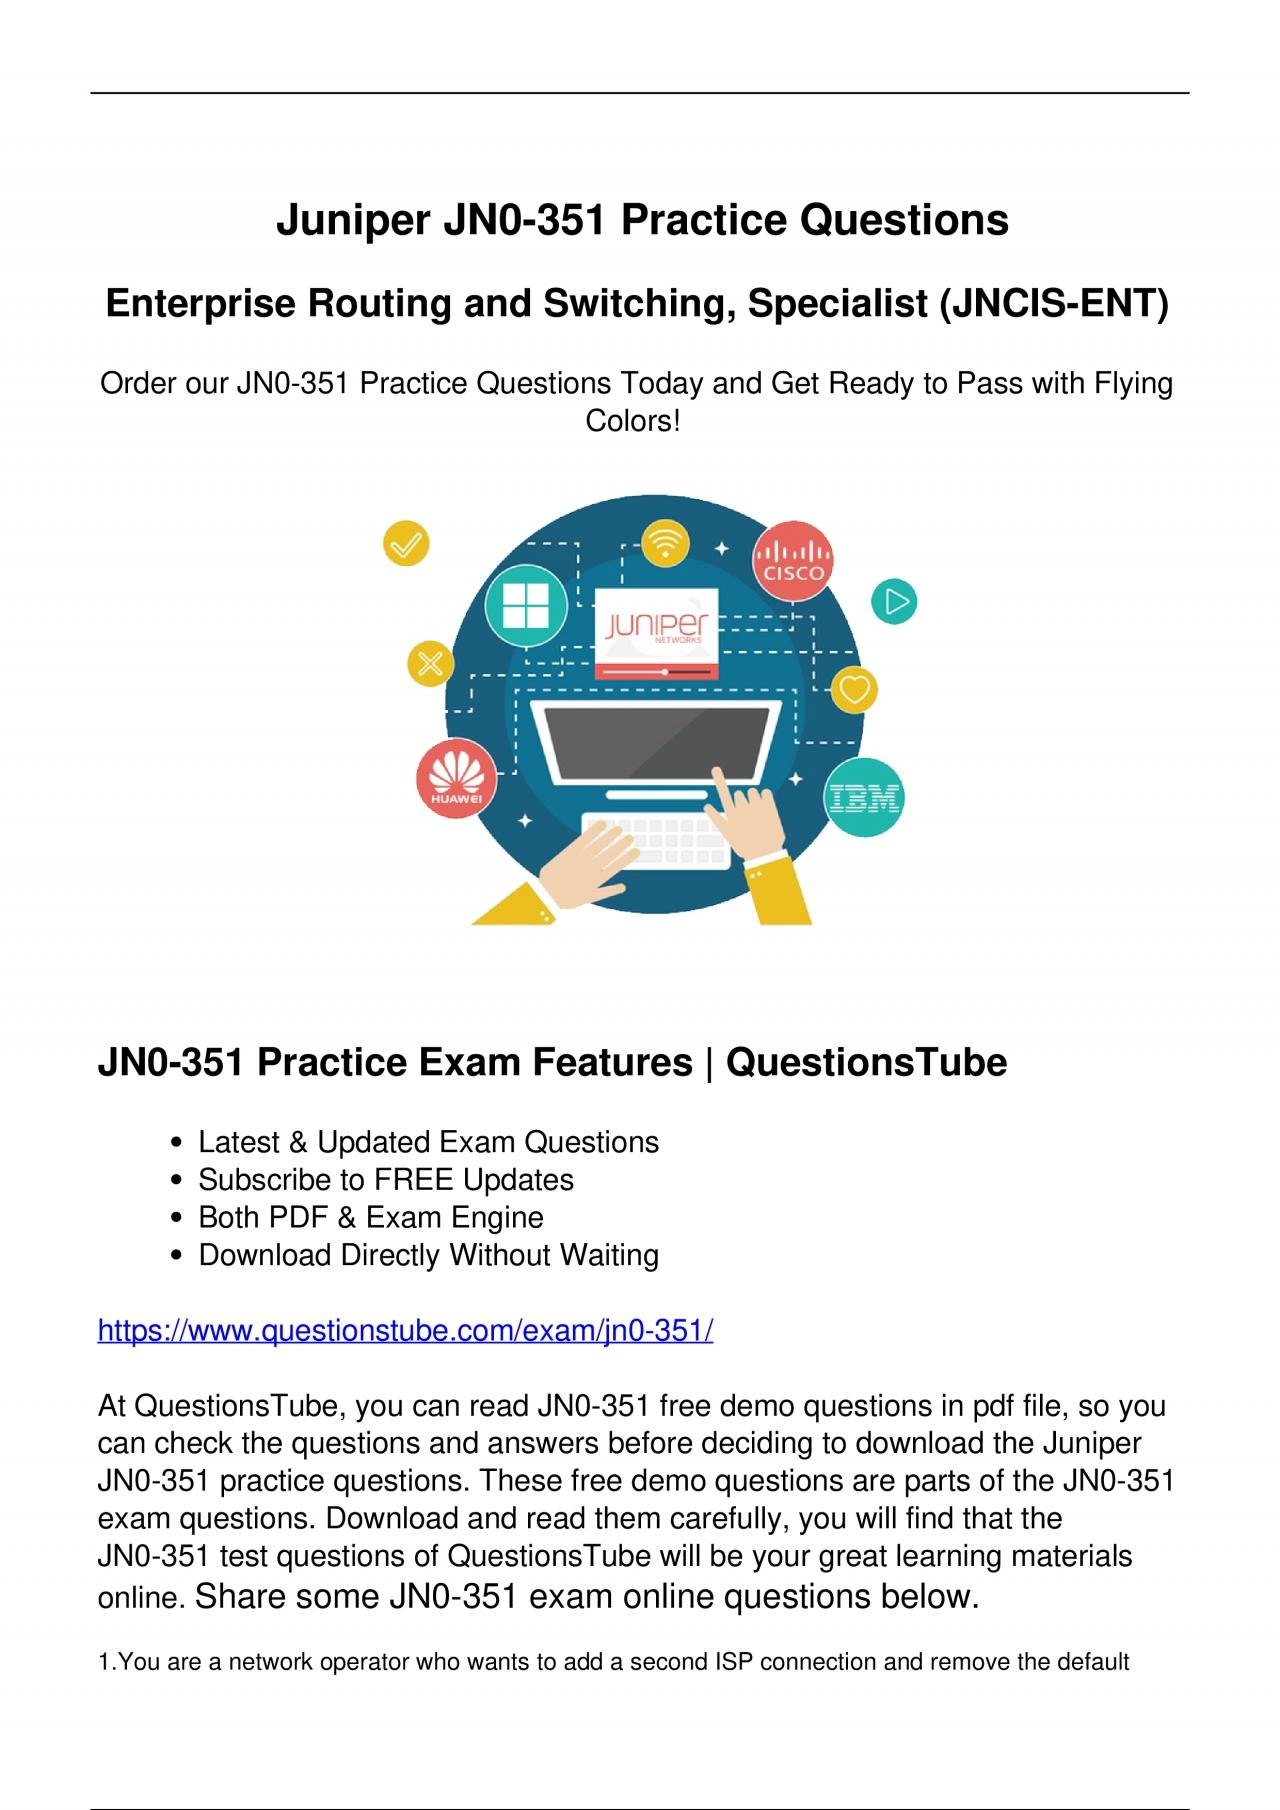 Right Way to Pass Juniper JN0-351 Exam - Reliable JN0-351 Exam Questions